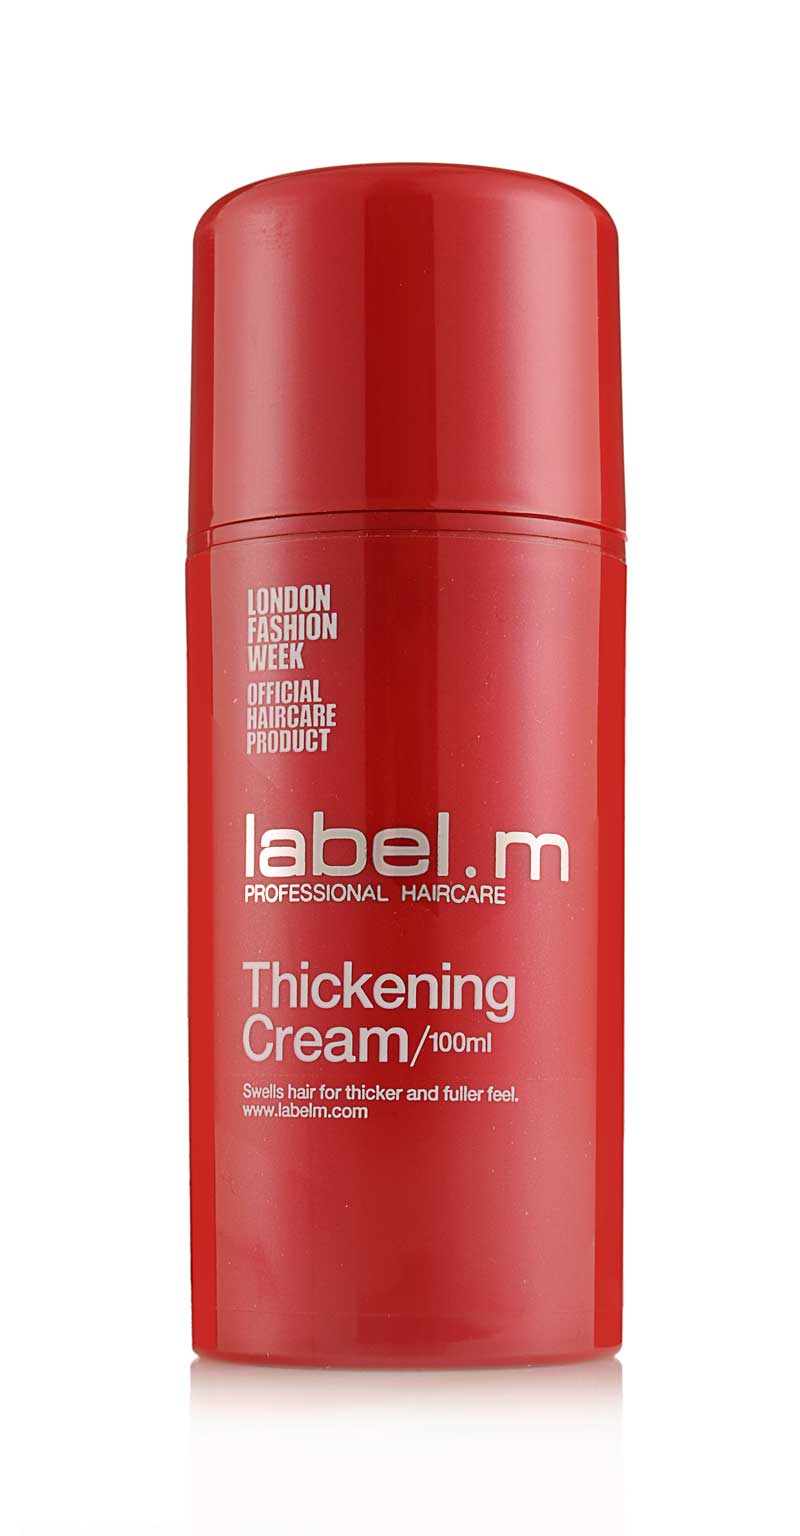 Thickening cream, £12.95, labelm.com